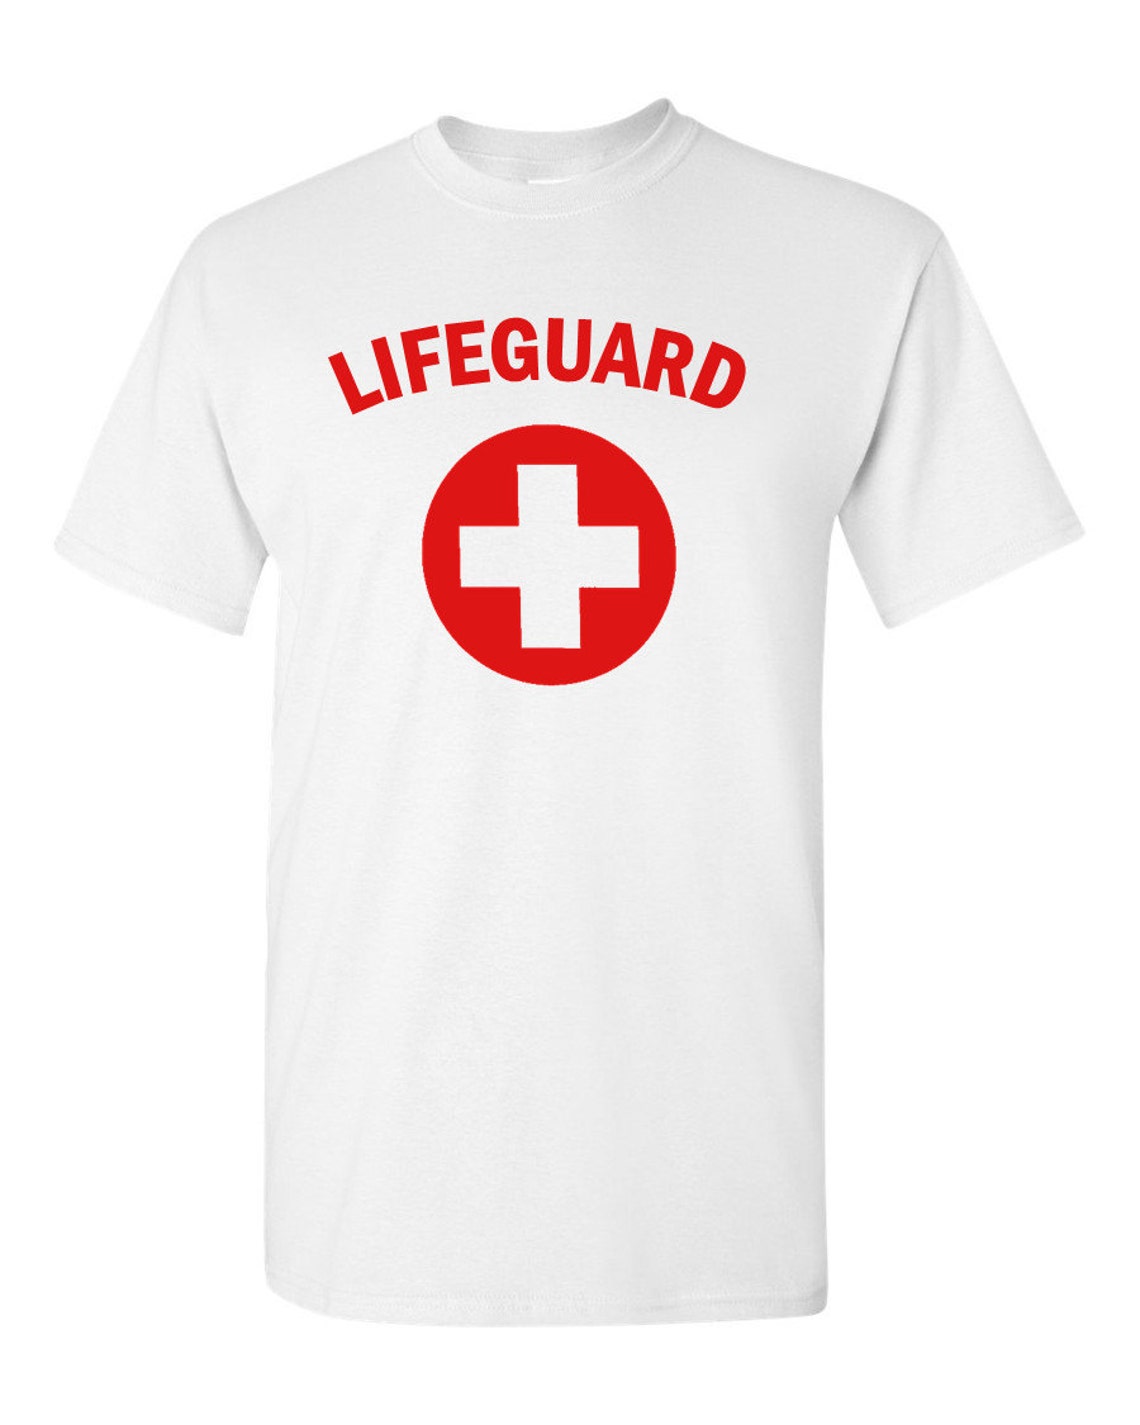 Lifeguard T-shirt Red Gray White Tee YMCA Pool Staff Shirt - Etsy